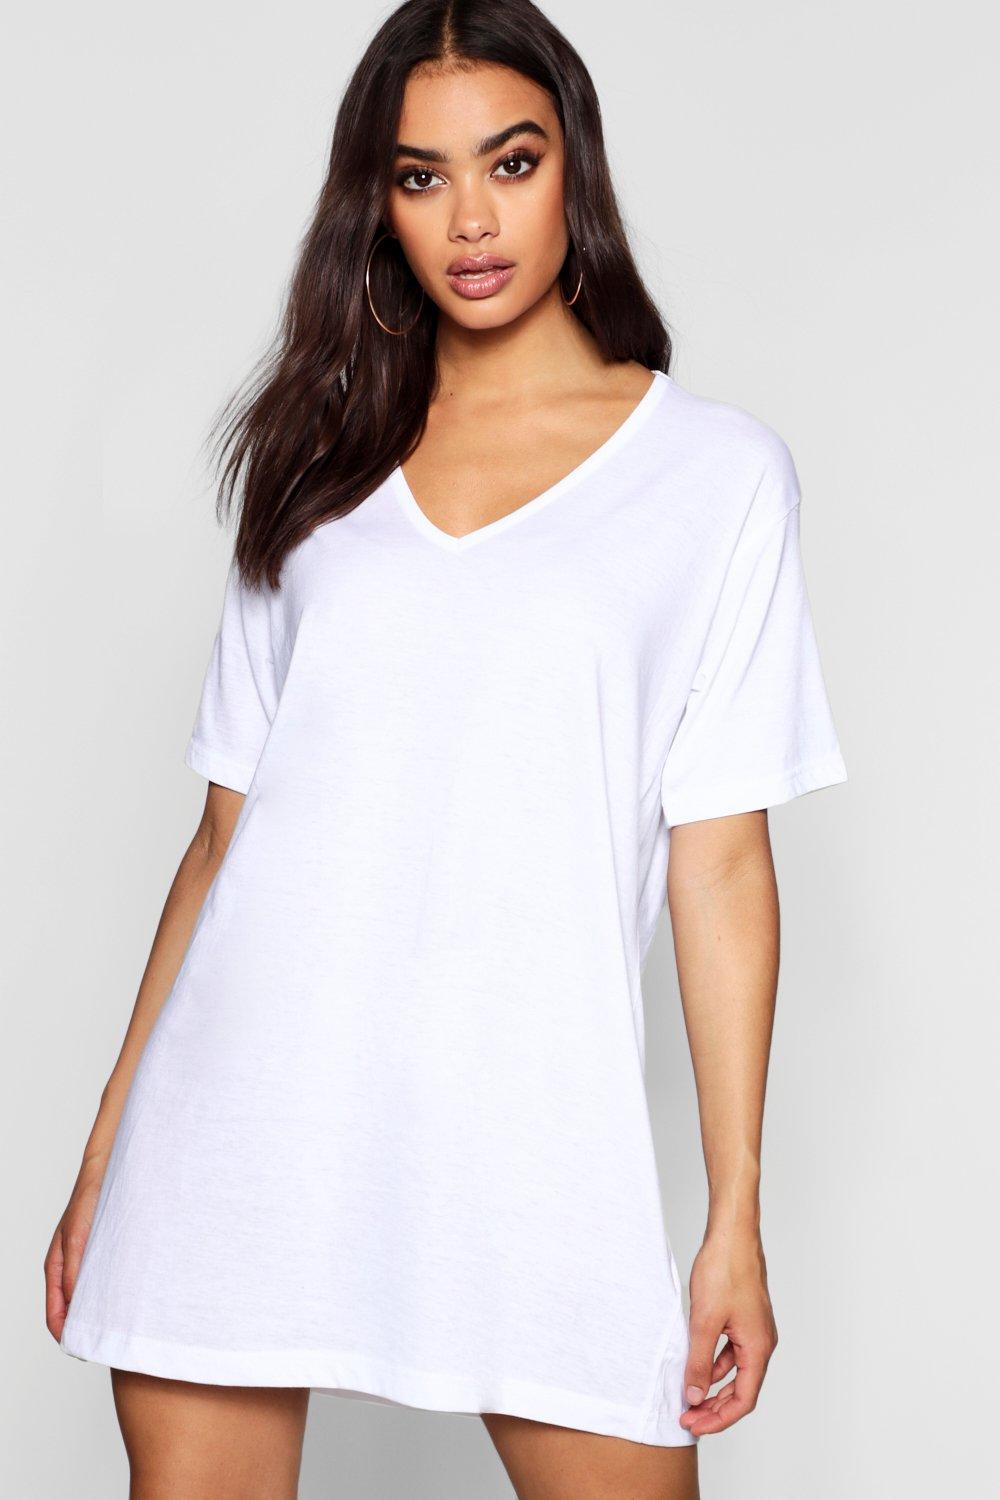 Boohoo Cotton Oversized V-neck T-shirt Dress in White - Lyst